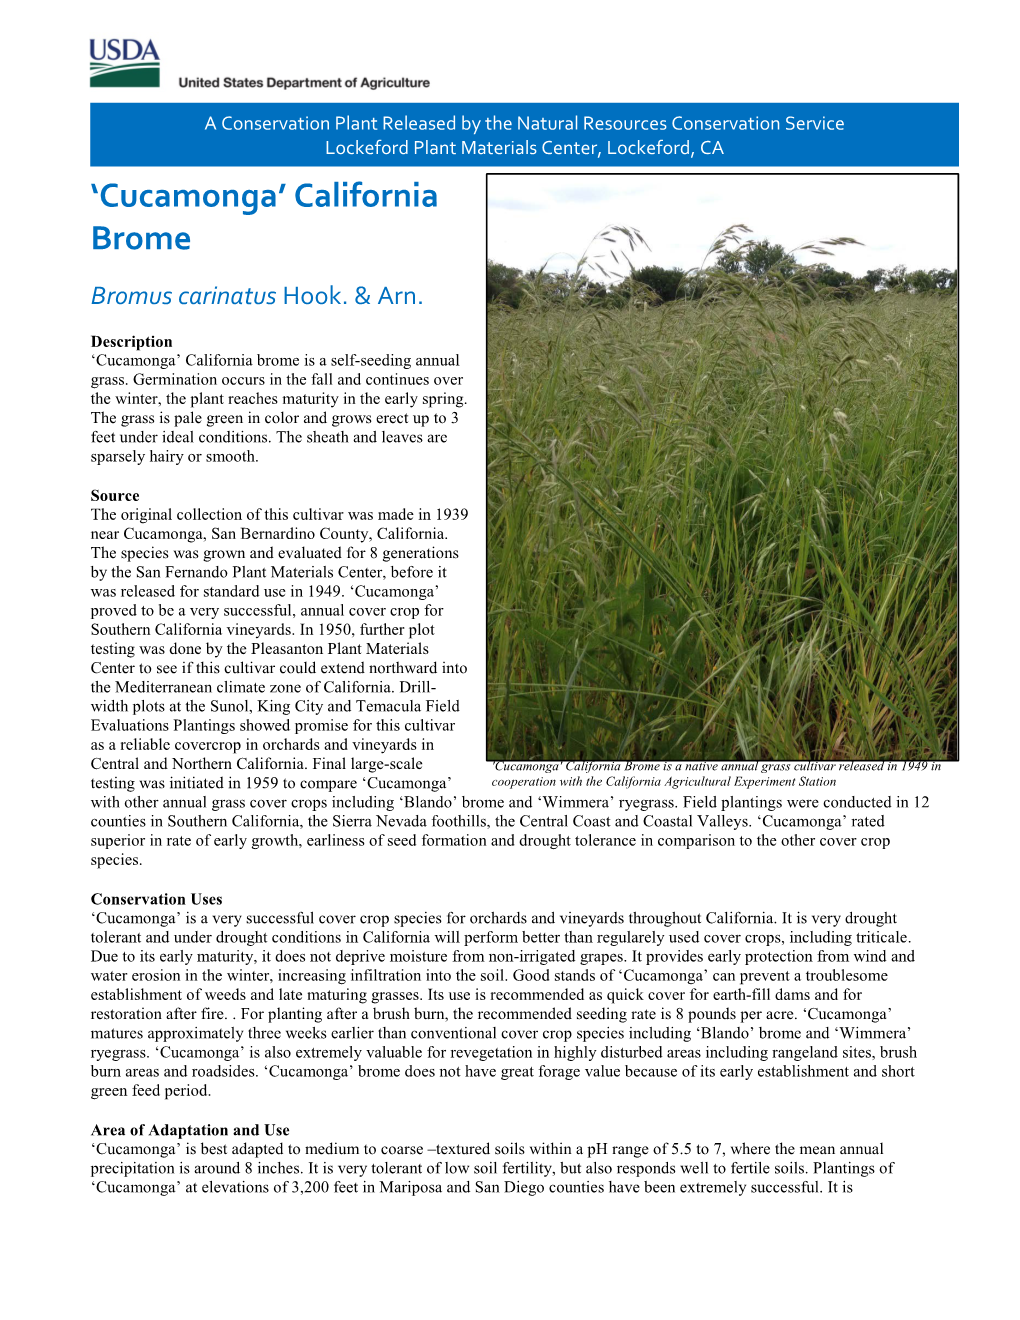 'Cucamonga' California Brome, (Bromus Carinatus), Conservation